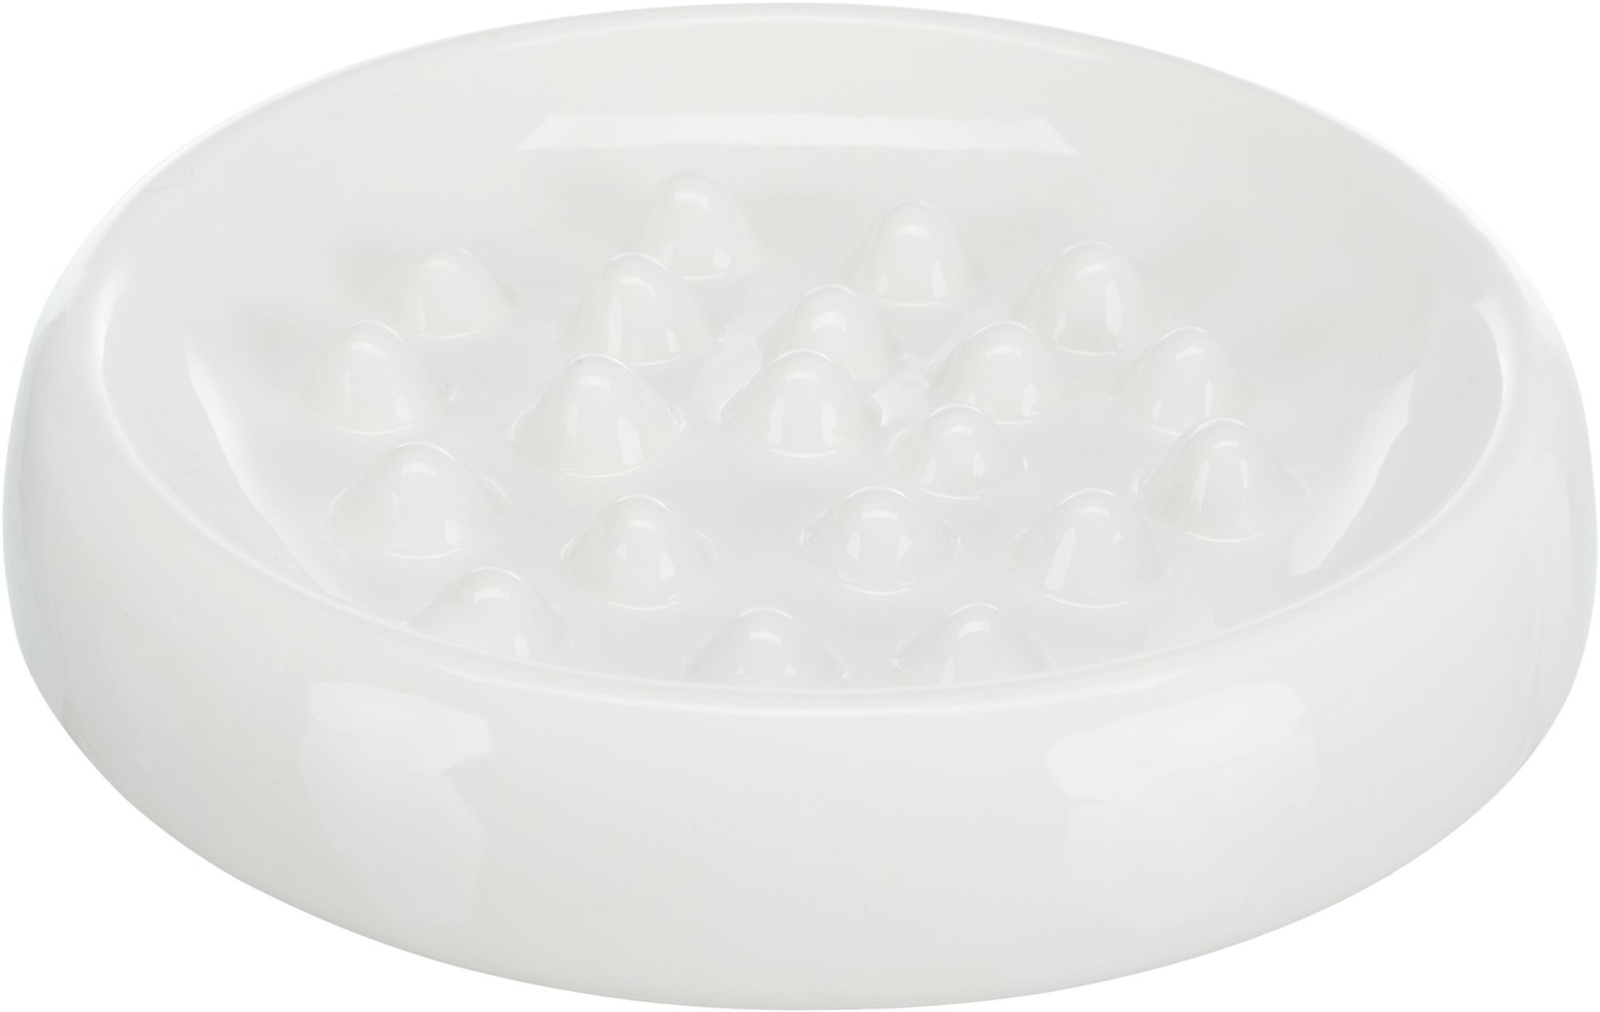 Trixie Trixie миска для медленного кормления, керамика, 0.25 л/ 18 см (470 г) миска поилка керамика 0 2 л 18 см серый